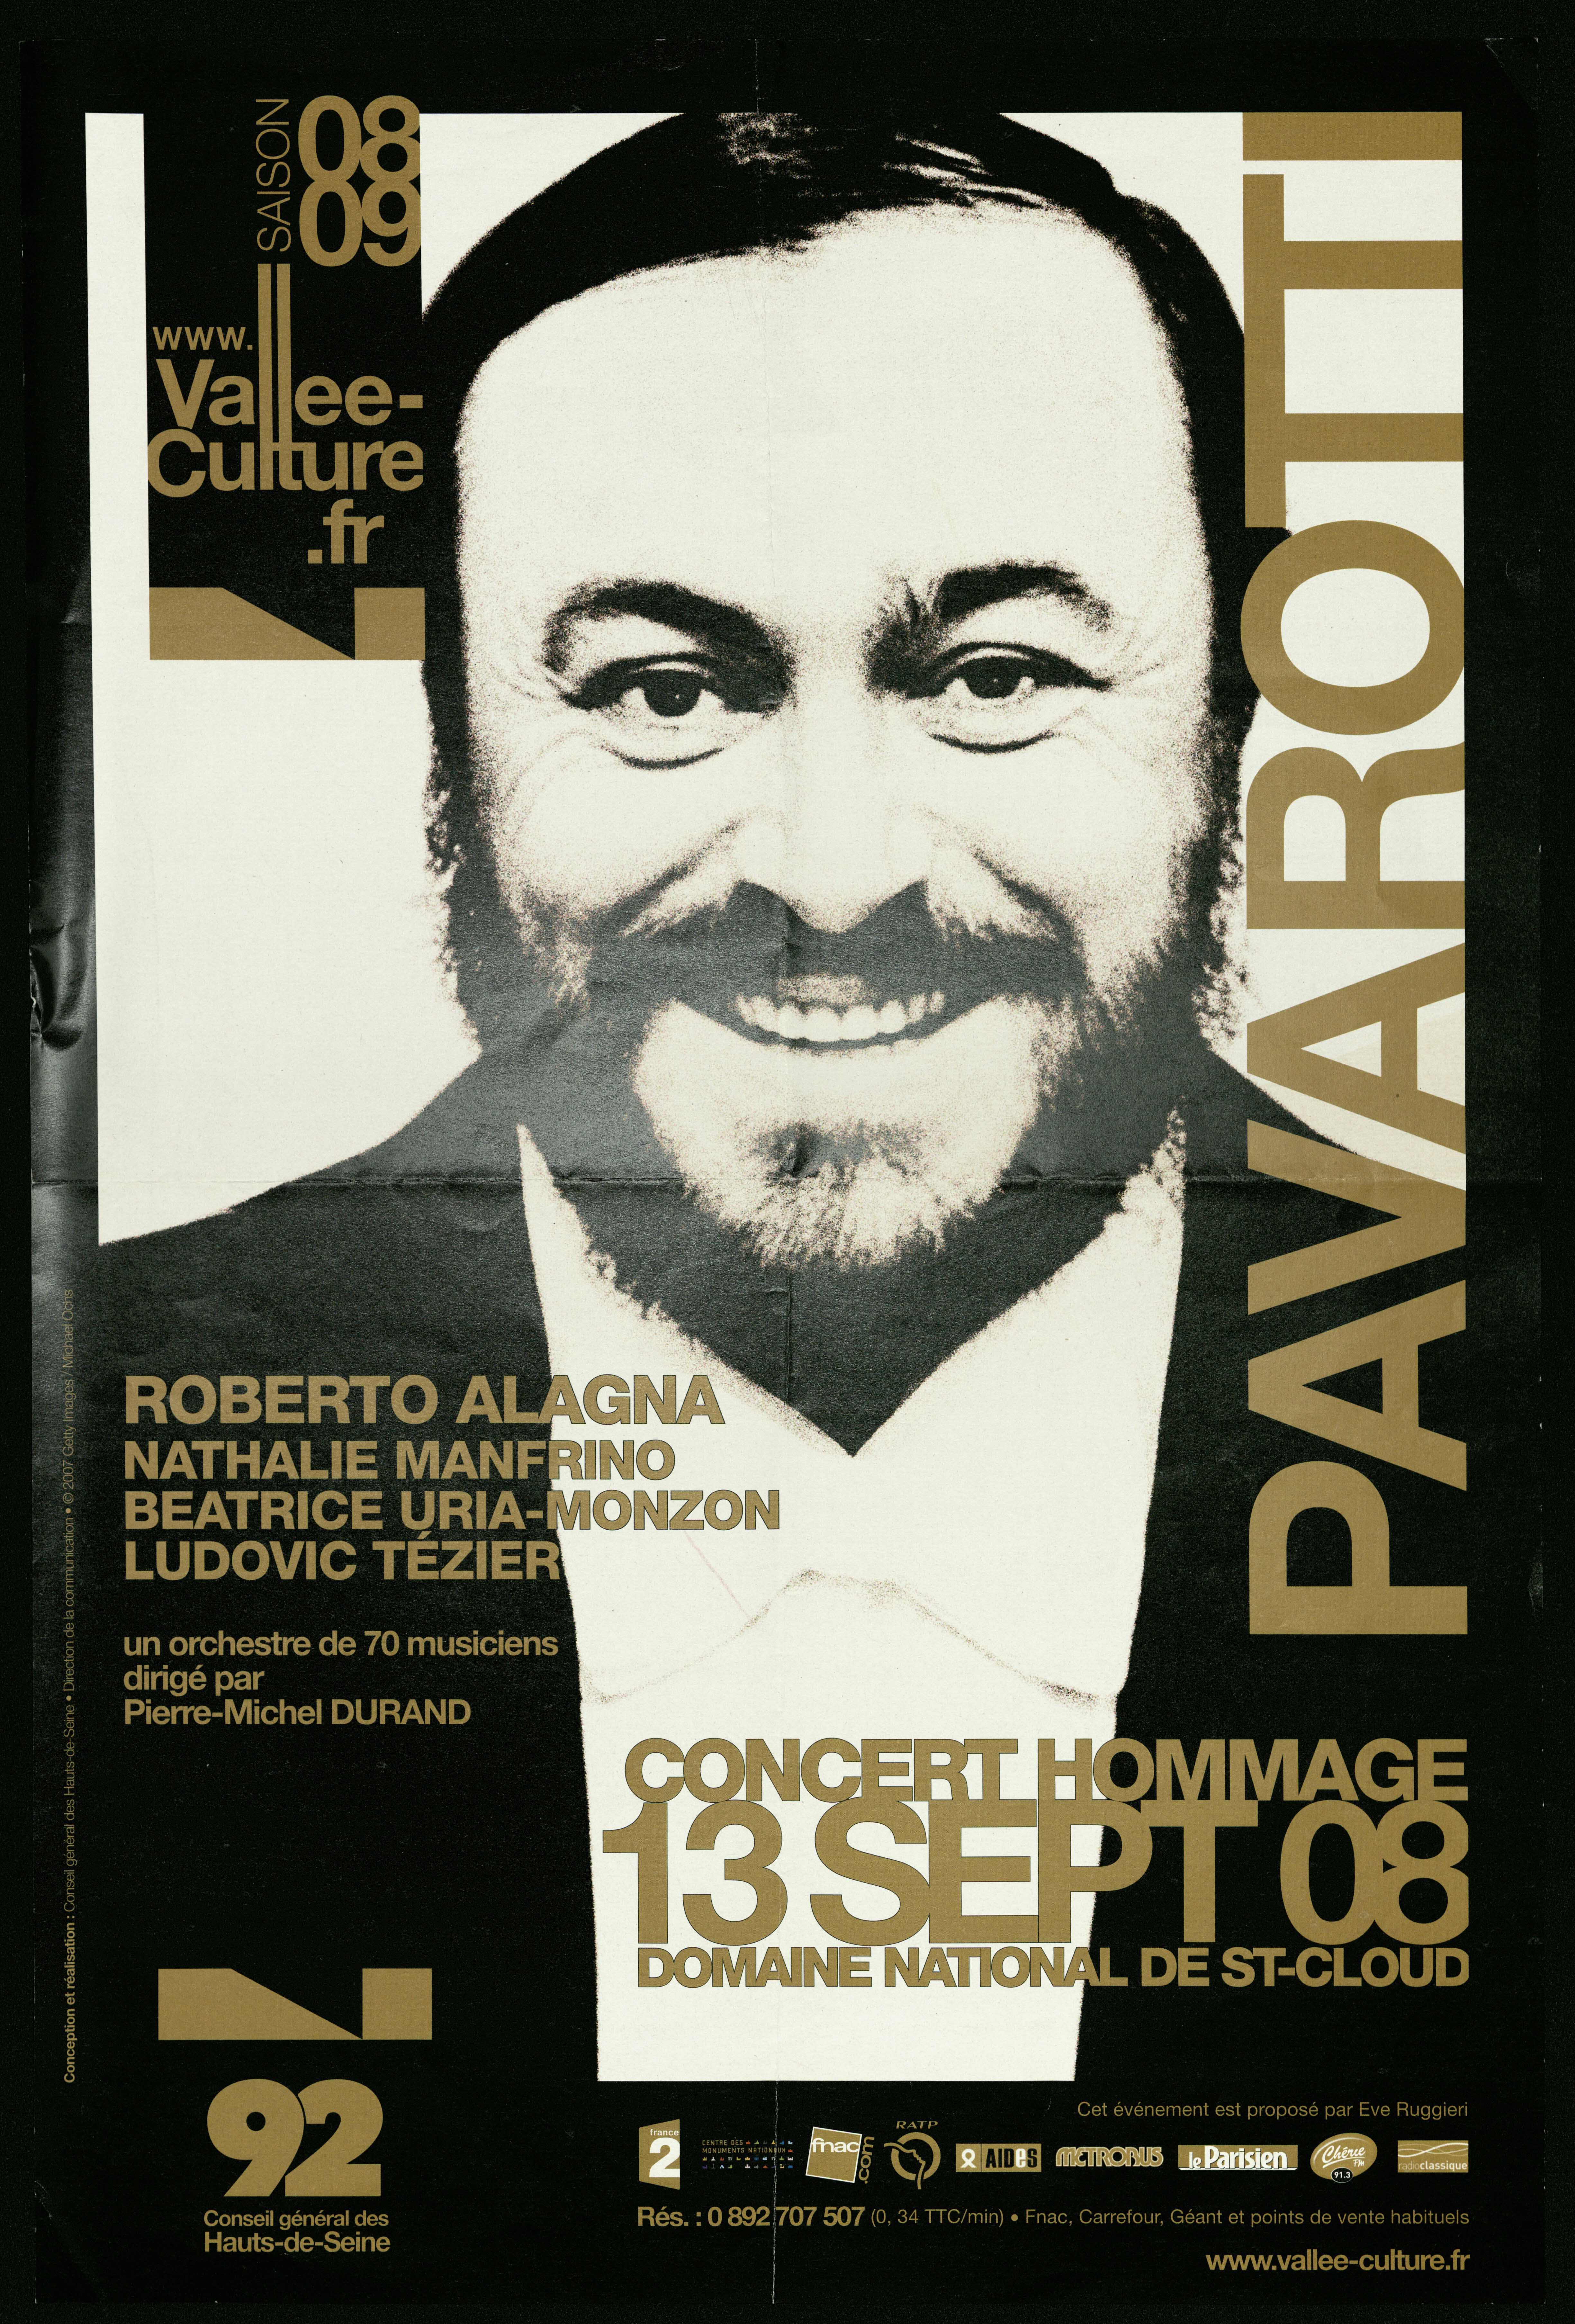 Vallée Culture 08-09. Pavarotti concert hommage 13 septembre 2008. Domaine national de St Cloud. Roberto Alagna, Nathalie Manfrino… /Mickael Ochs. - CG92, 2008. - 1 affiche ill. coul., 60 x 40 cm.